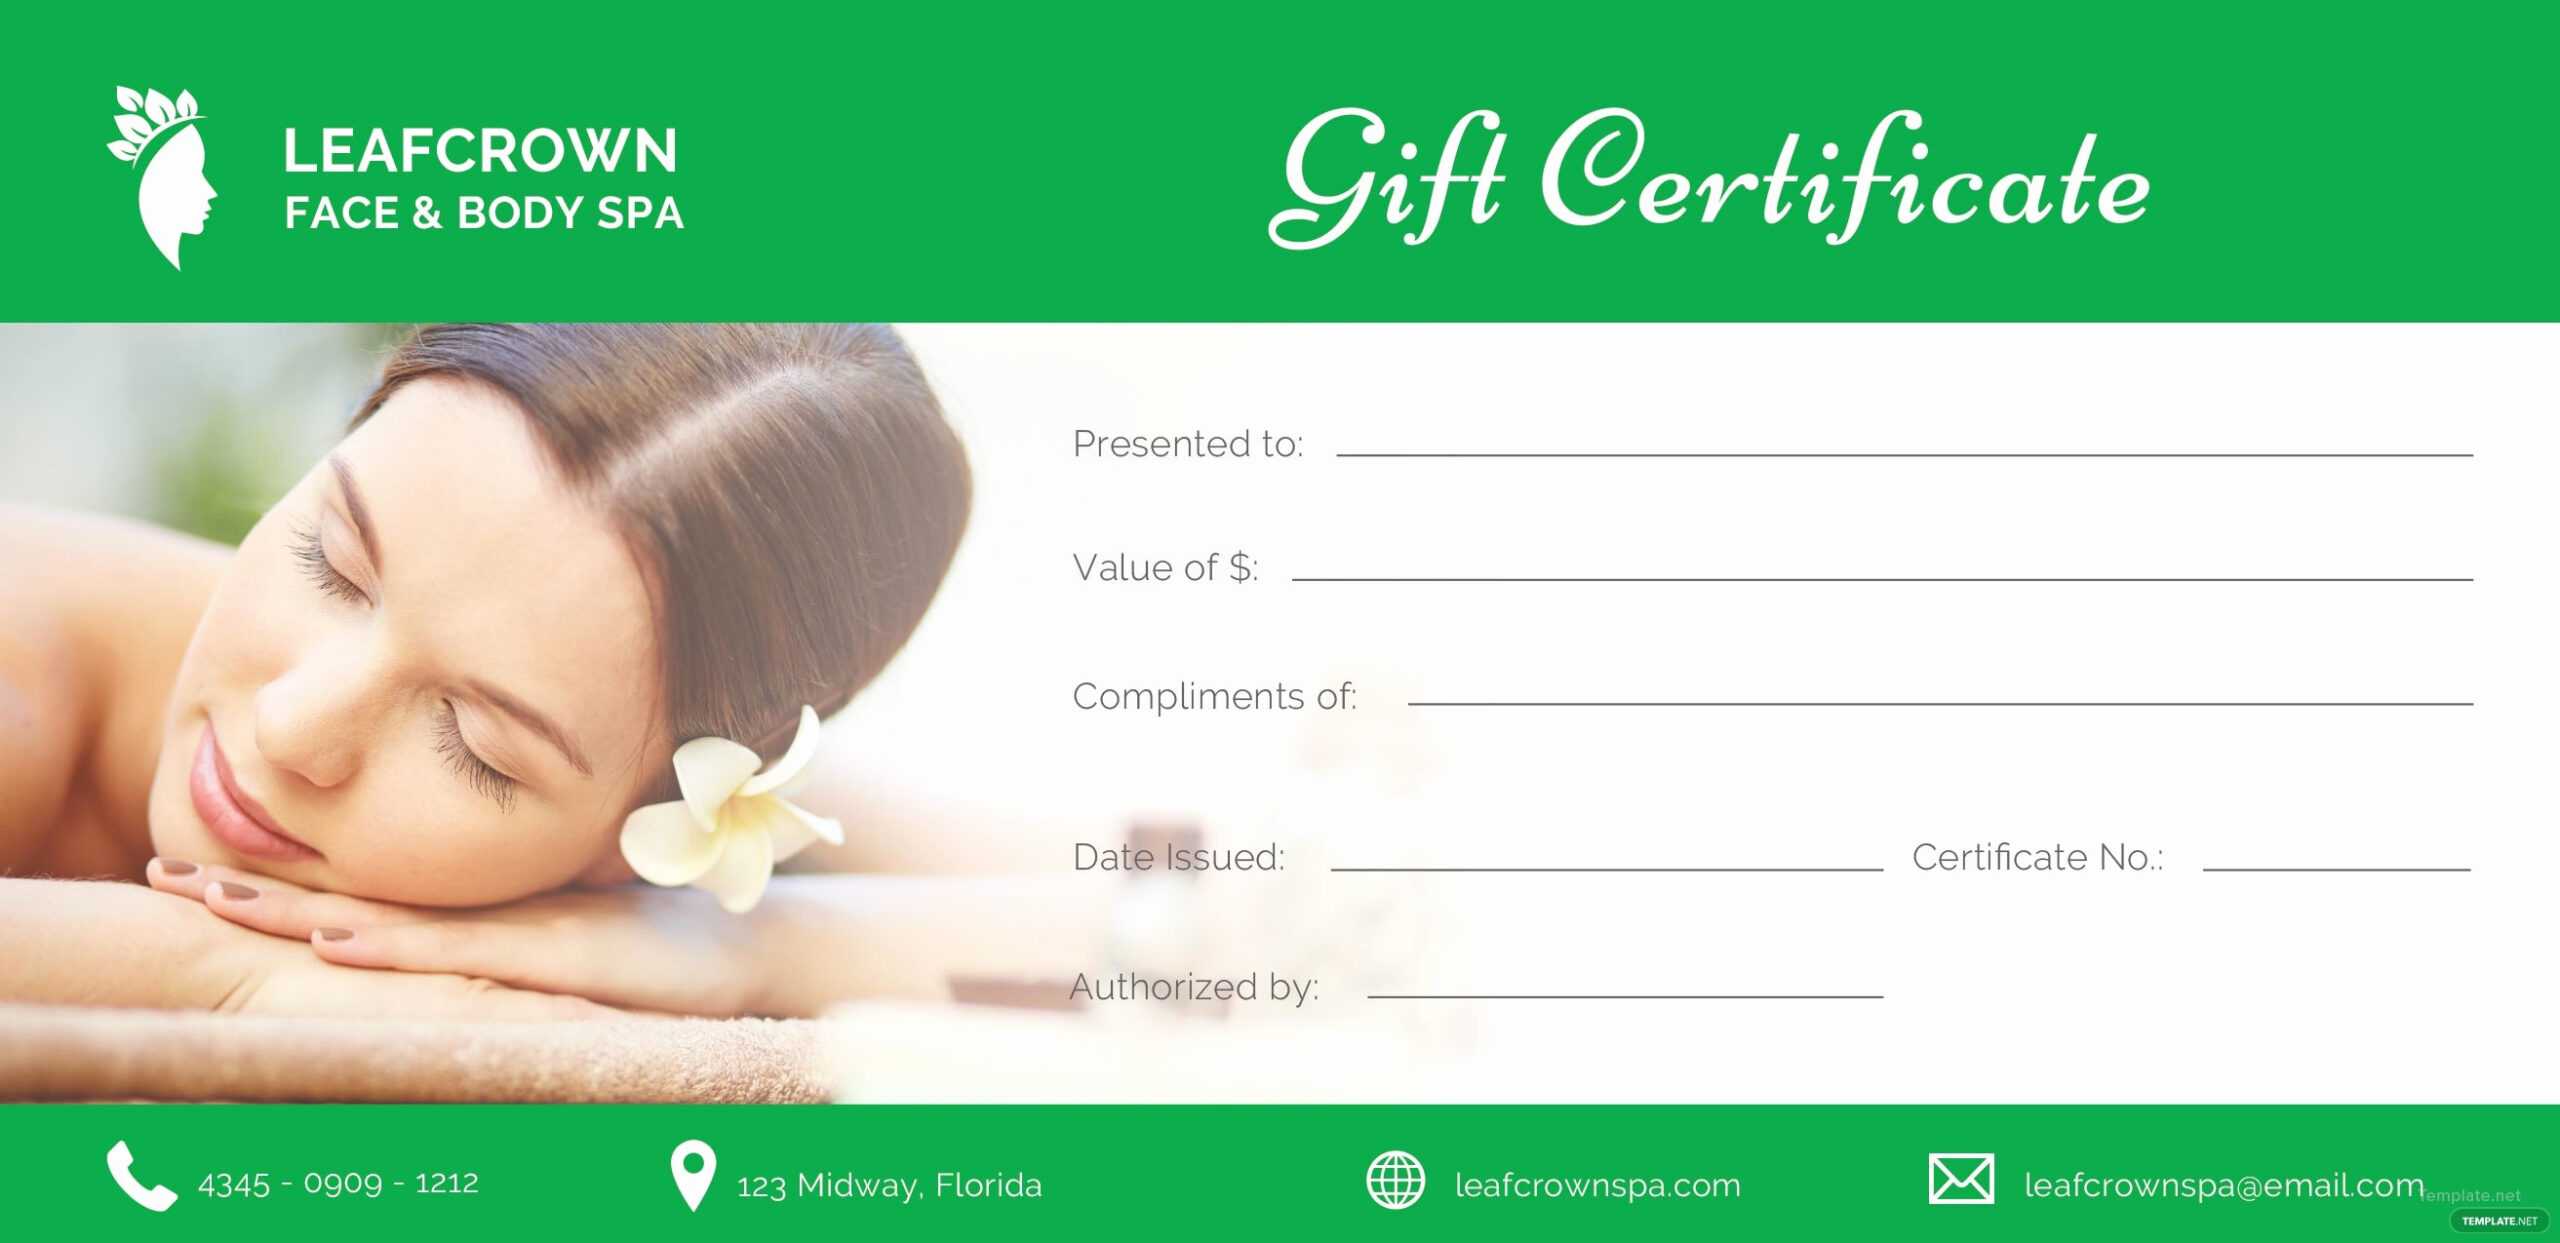 50 Salon Gift Certificate Templates | Culturatti With Regard To Spa Day Gift Certificate Template